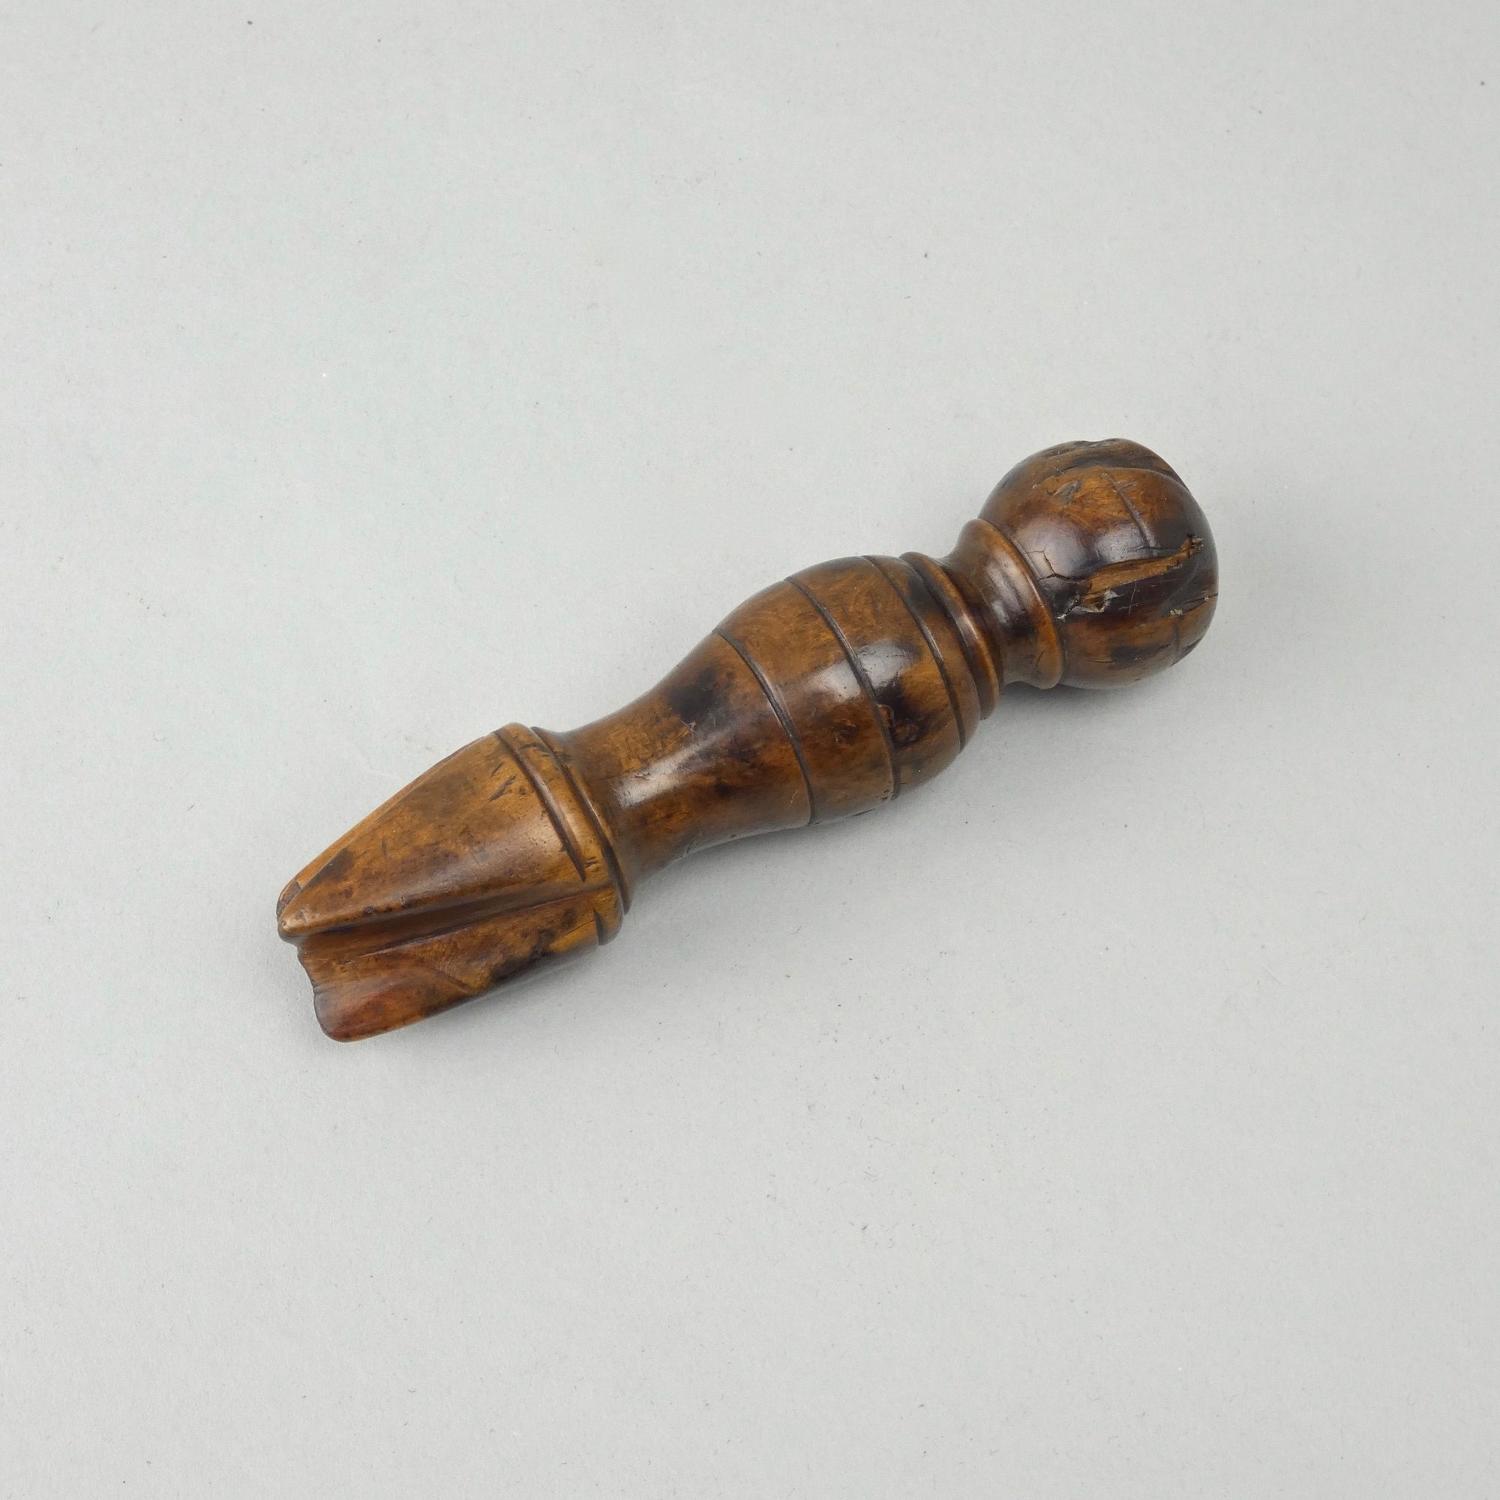 Wooden tool